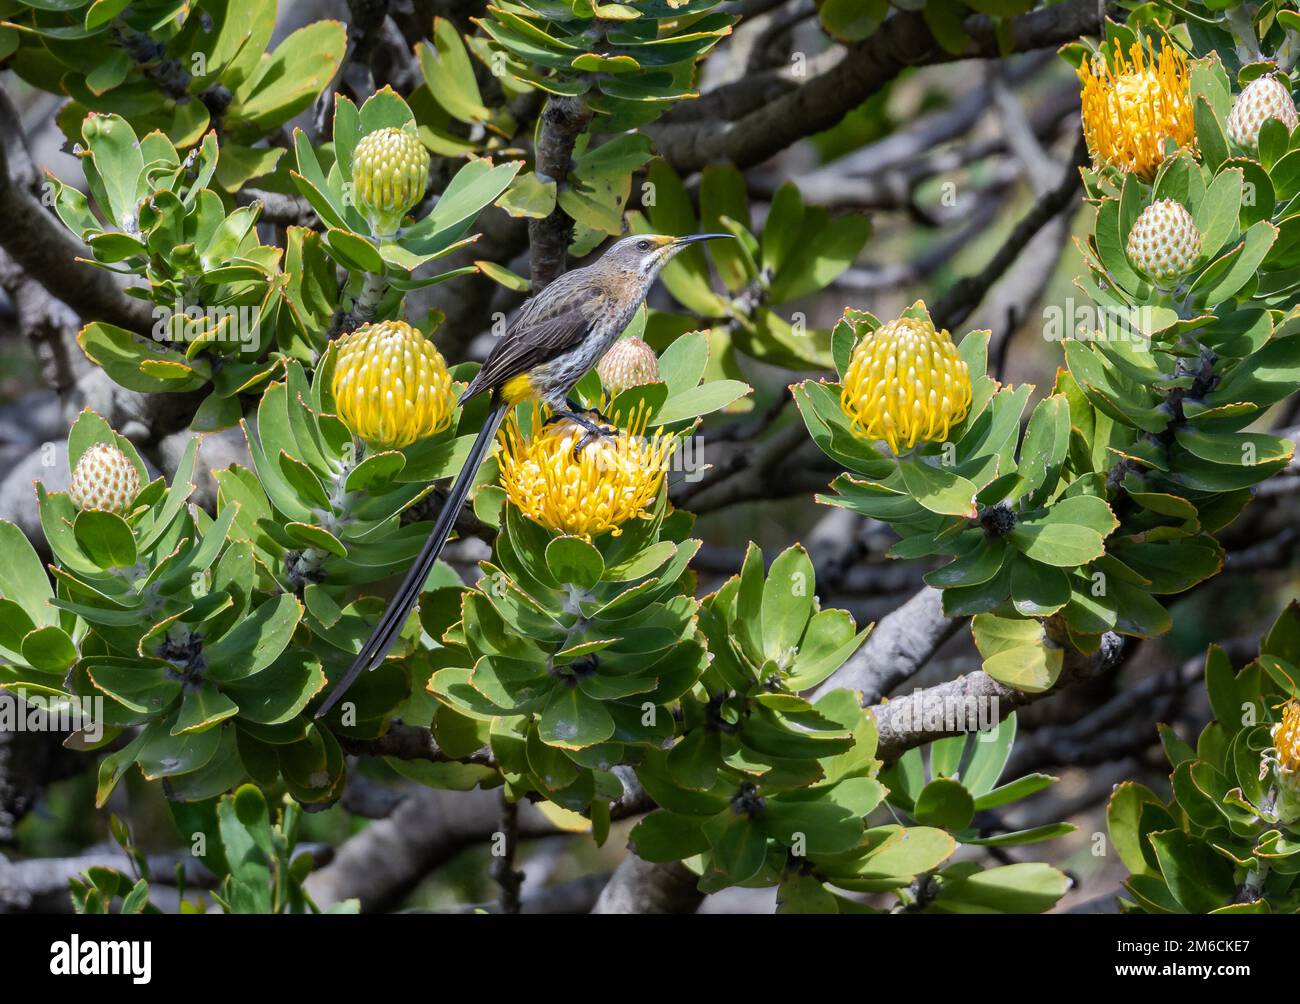 Un Sugarbird del Cabo (Promerops cafer) que se alimenta de flores amarillas de Fynbos, o Pincushion Protea. Western Cape, Sudáfrica. Foto de stock